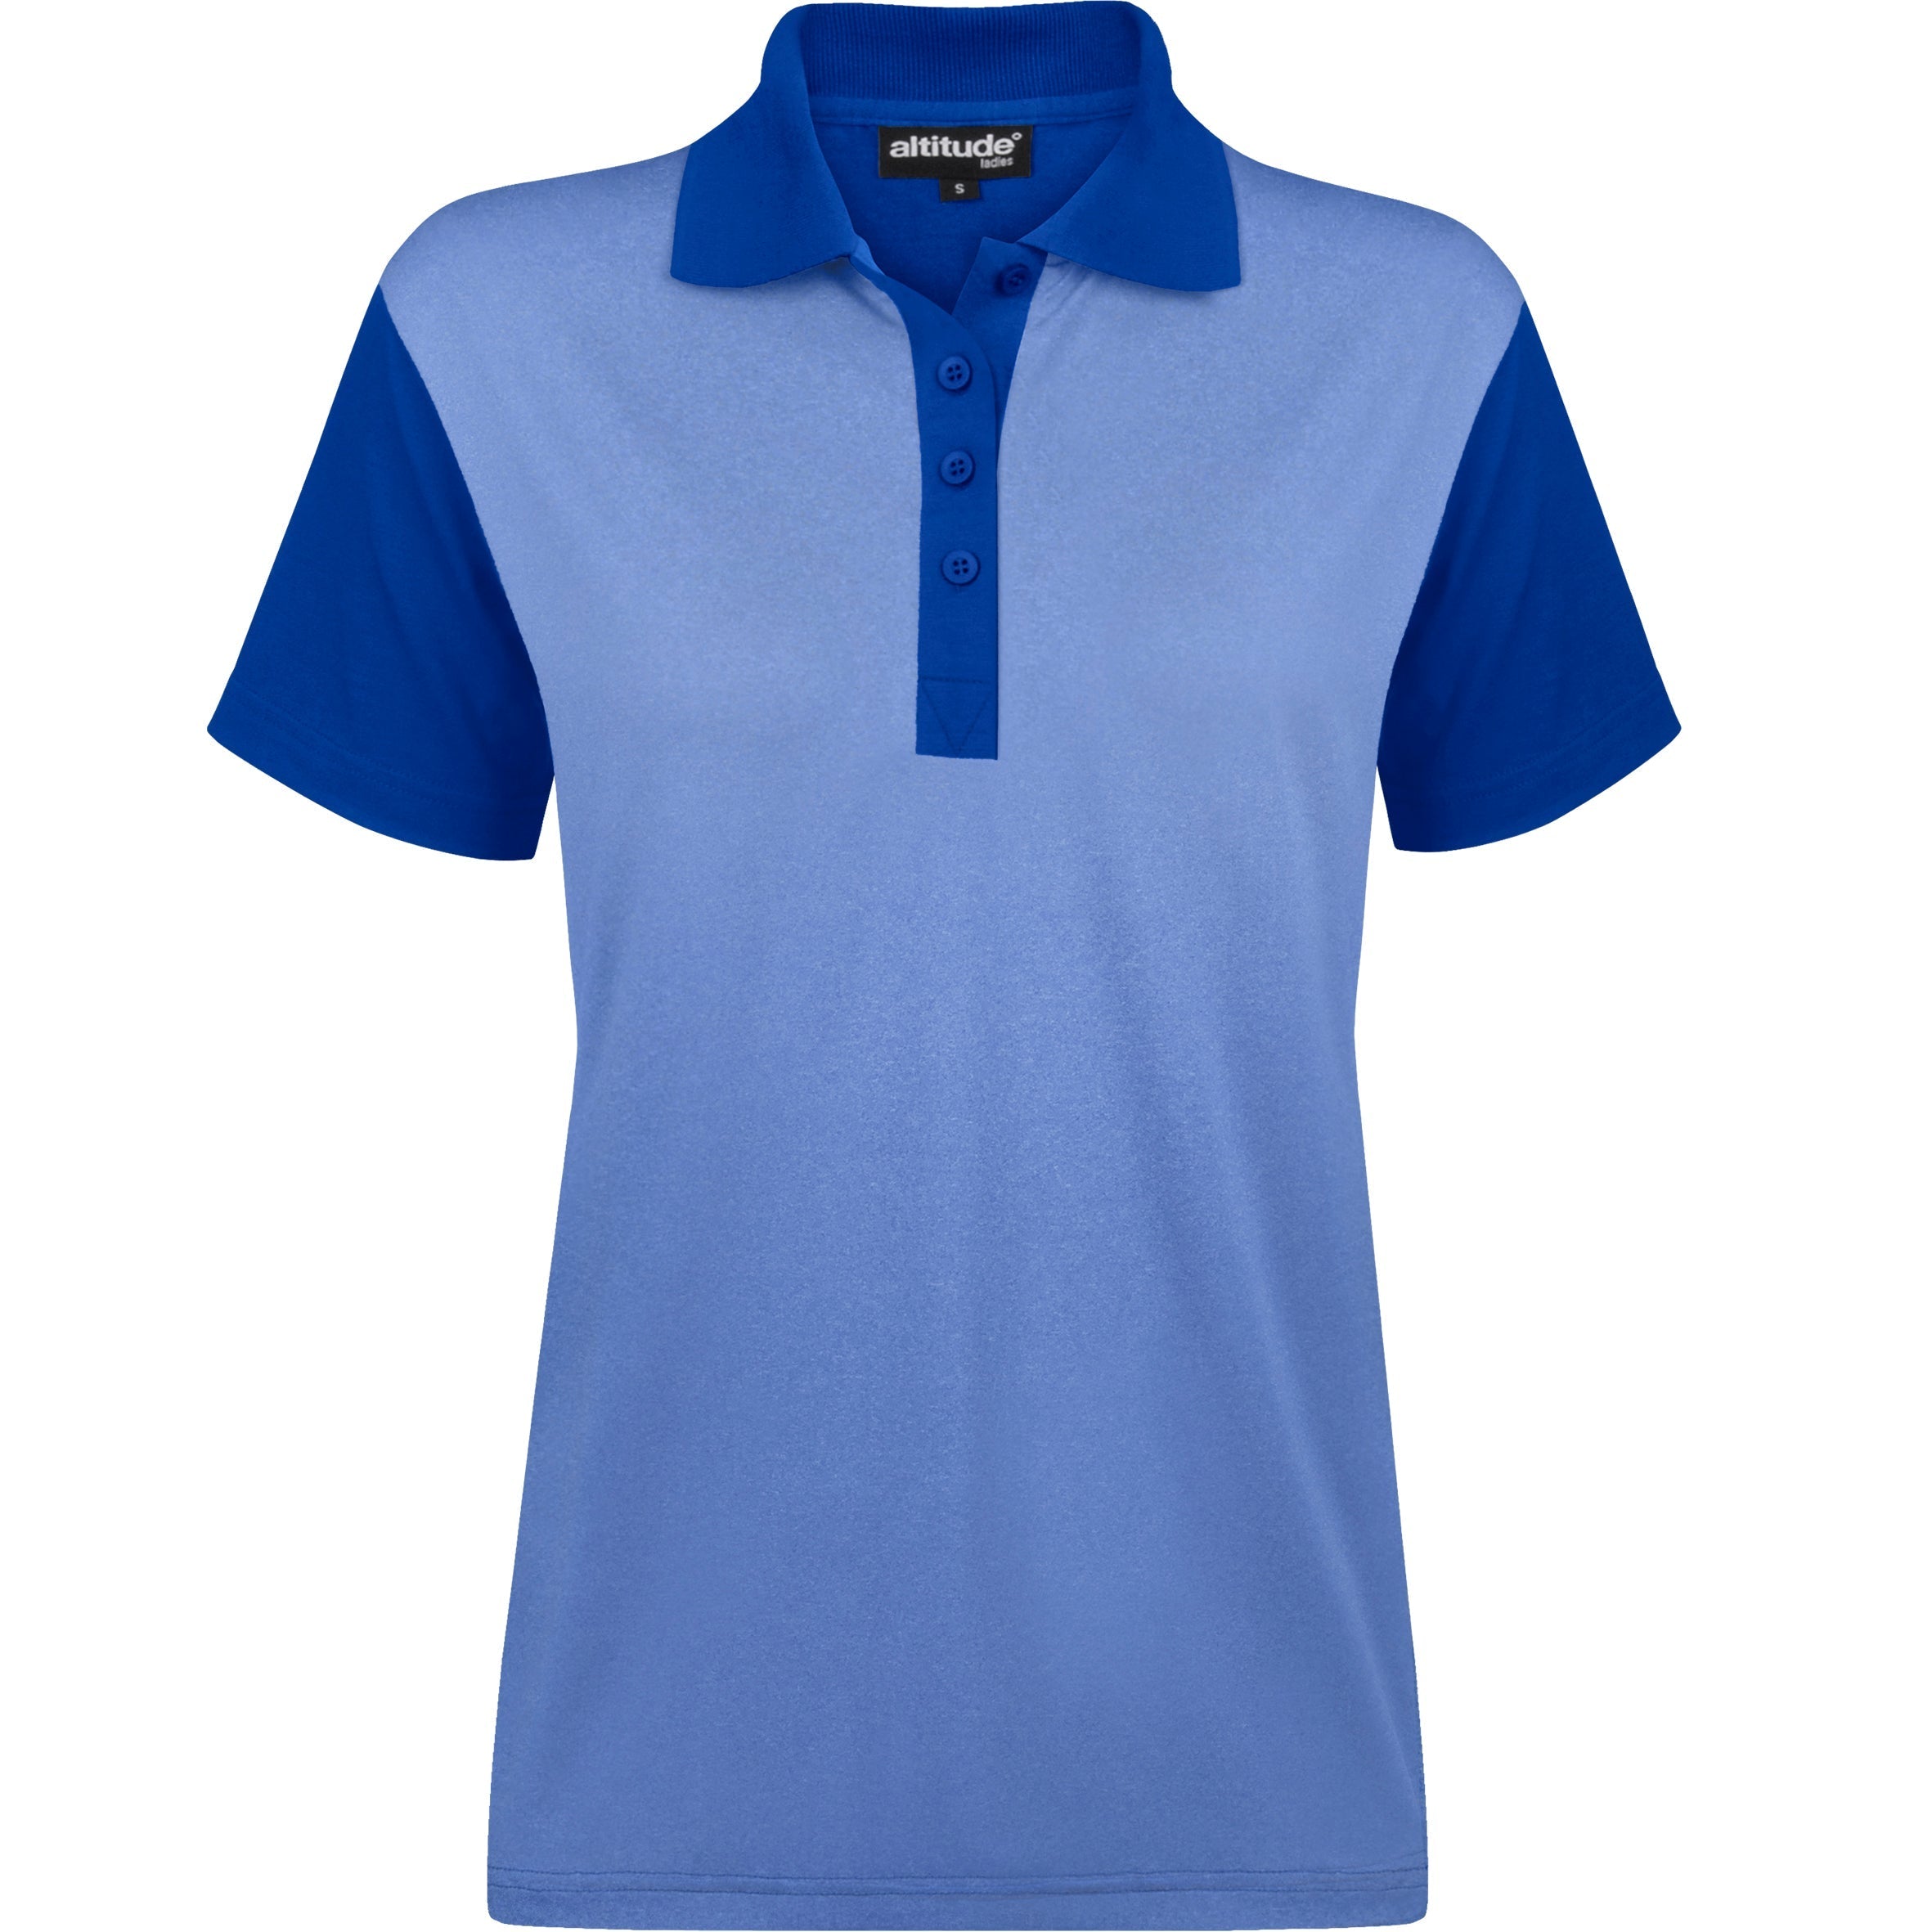 Ladies Crossfire Melange Golf Shirt-